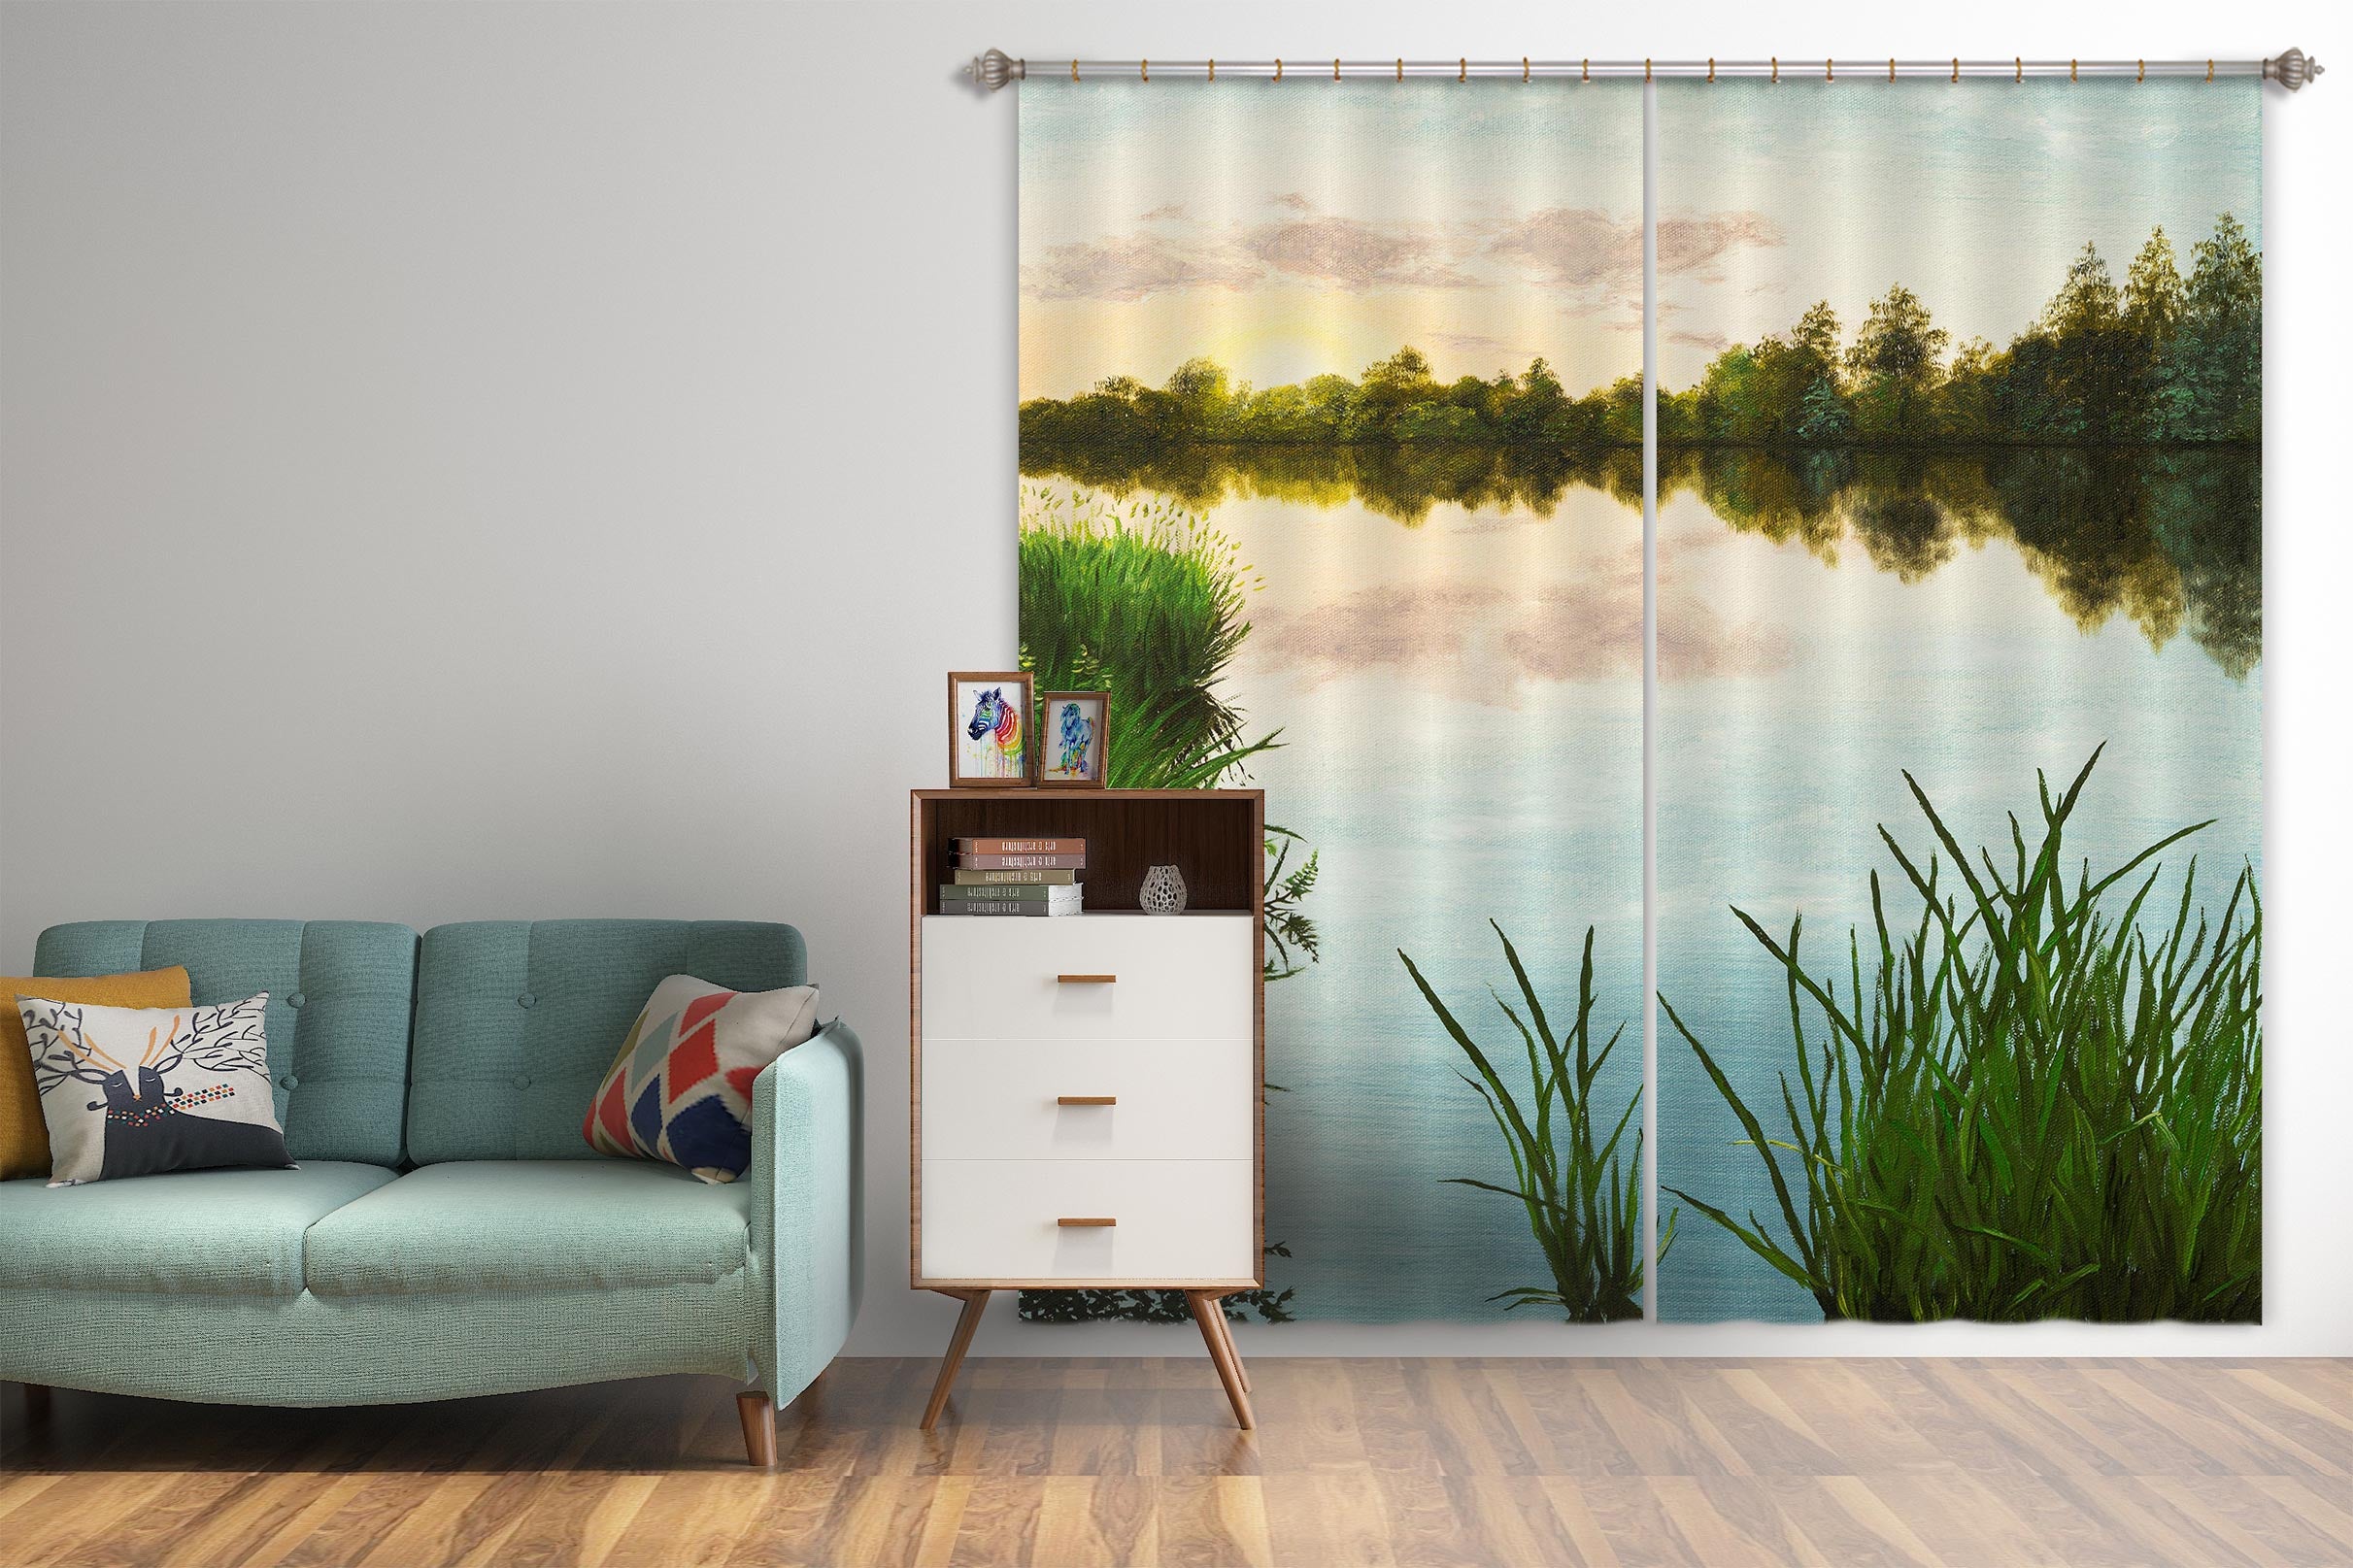 3D Grass Lakeside 1724 Marina Zotova Curtain Curtains Drapes